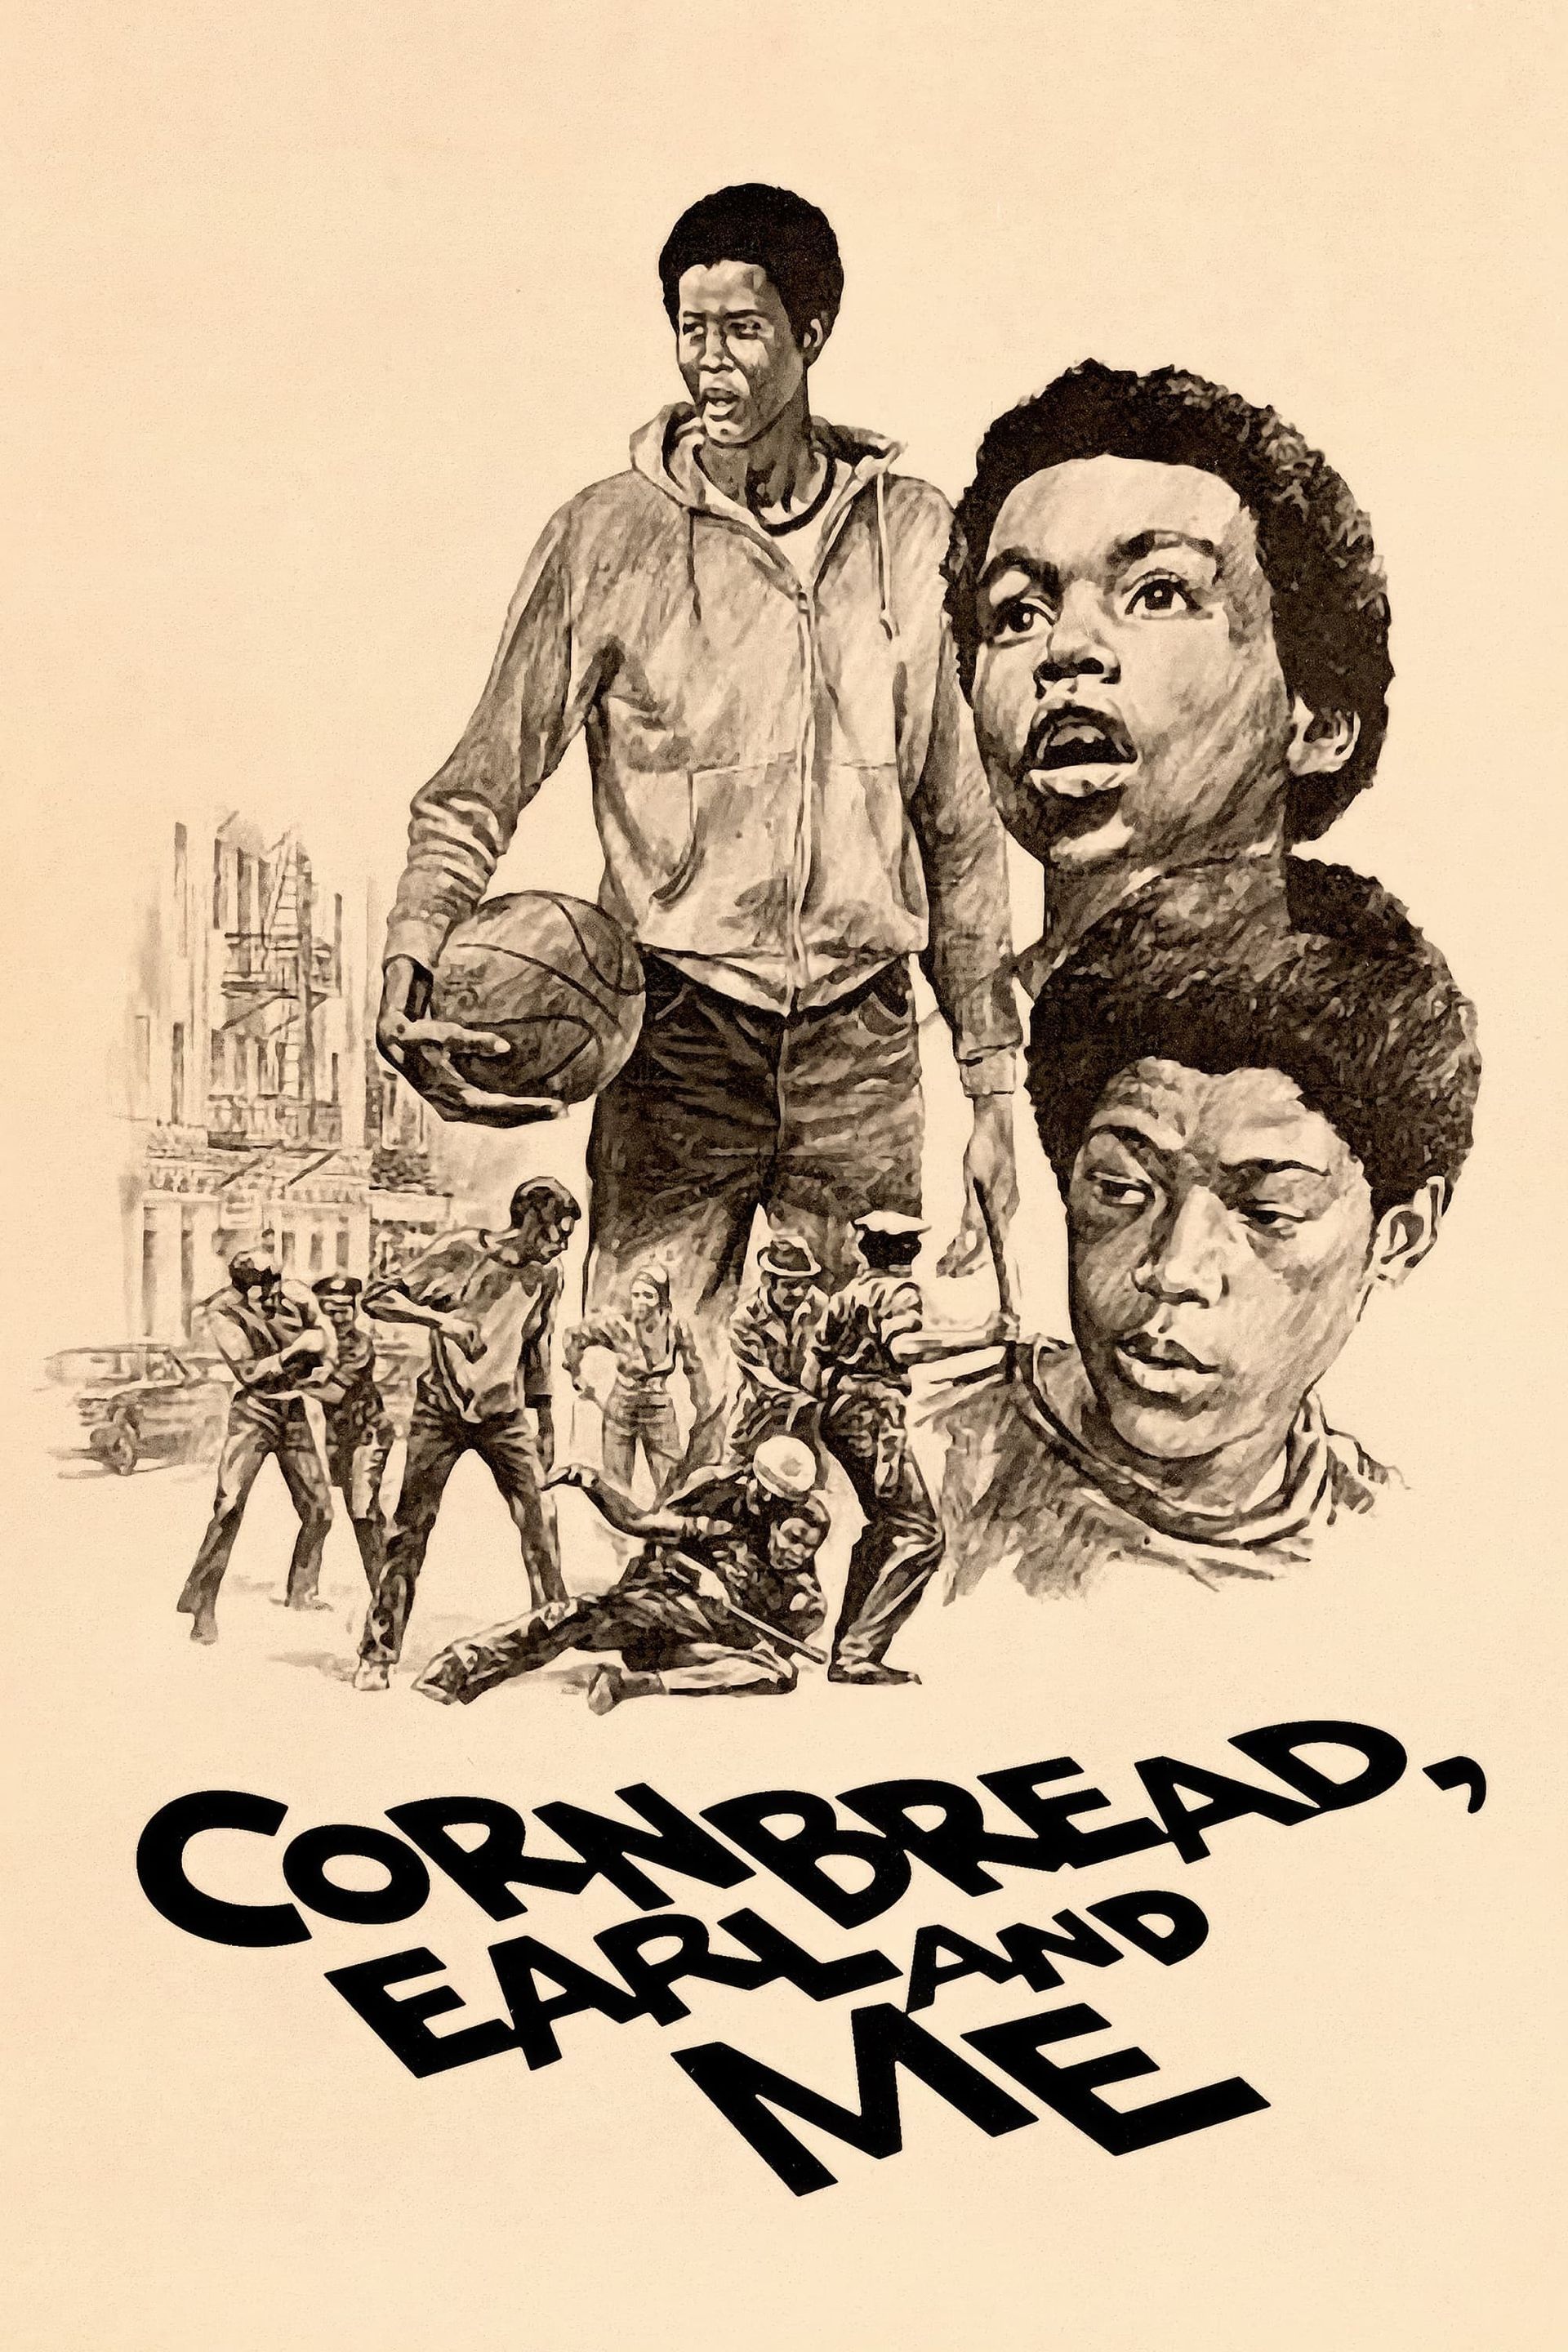 Cornbread, Earl and Me – Forgotten Films